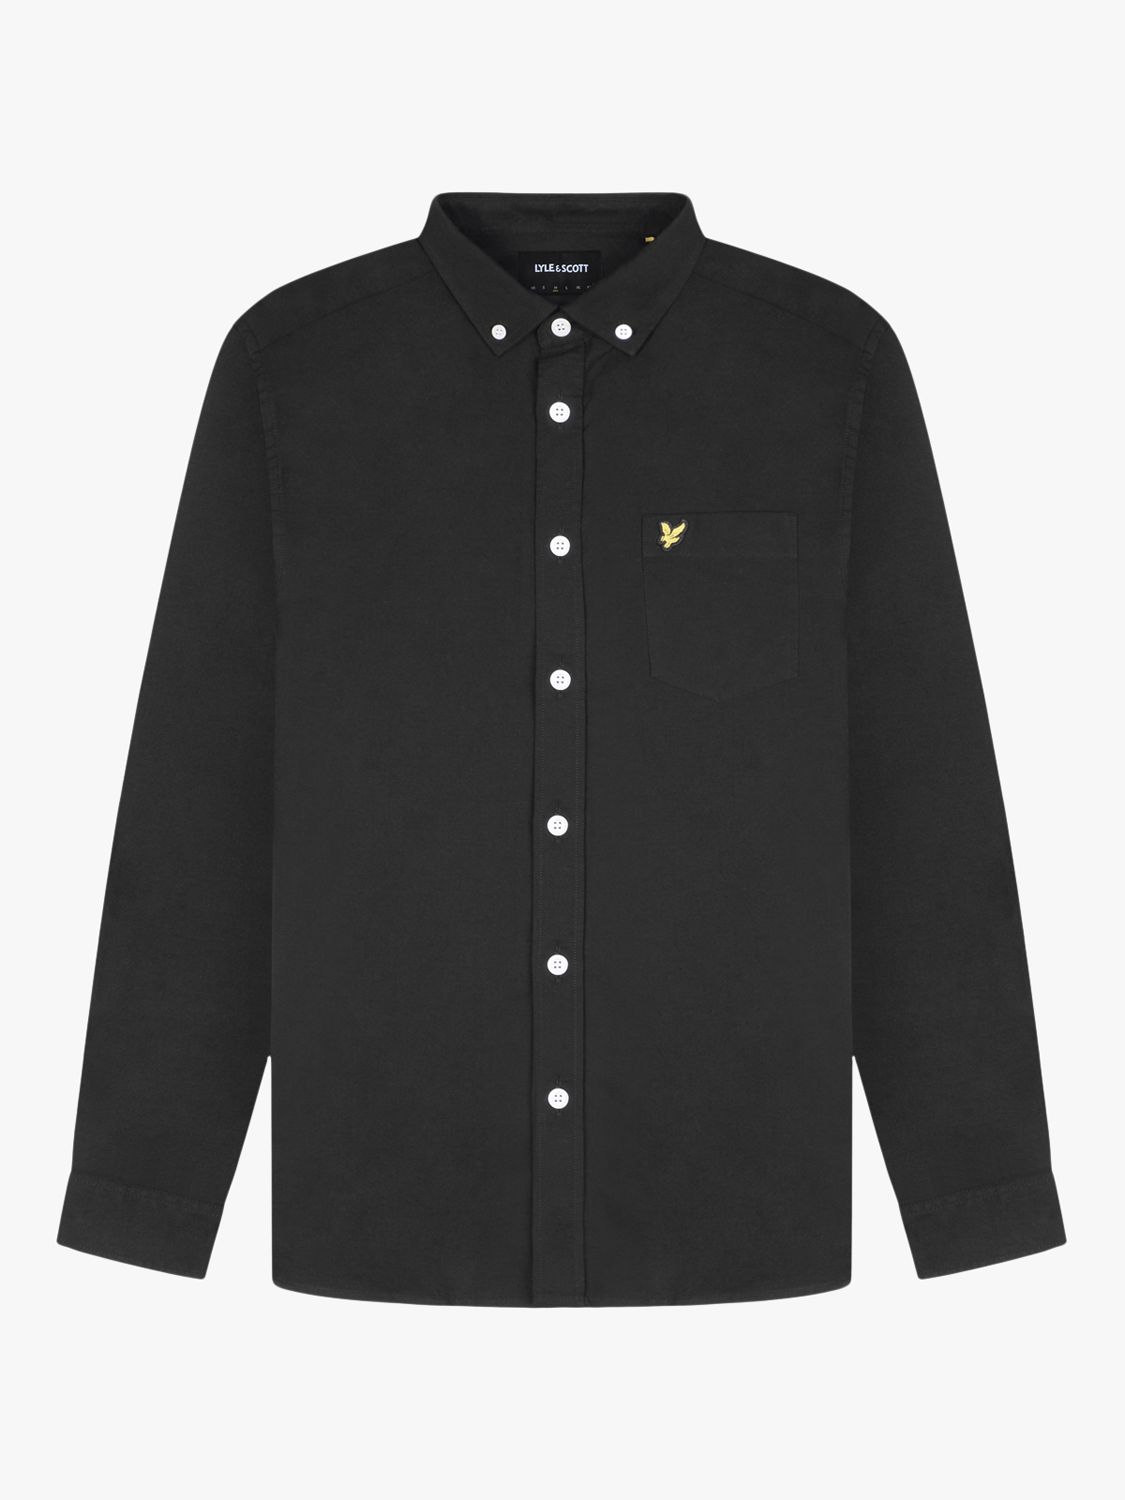 Lyle & Scott Regular Fit Oxford Shirt, Jet Black at John Lewis & Partners